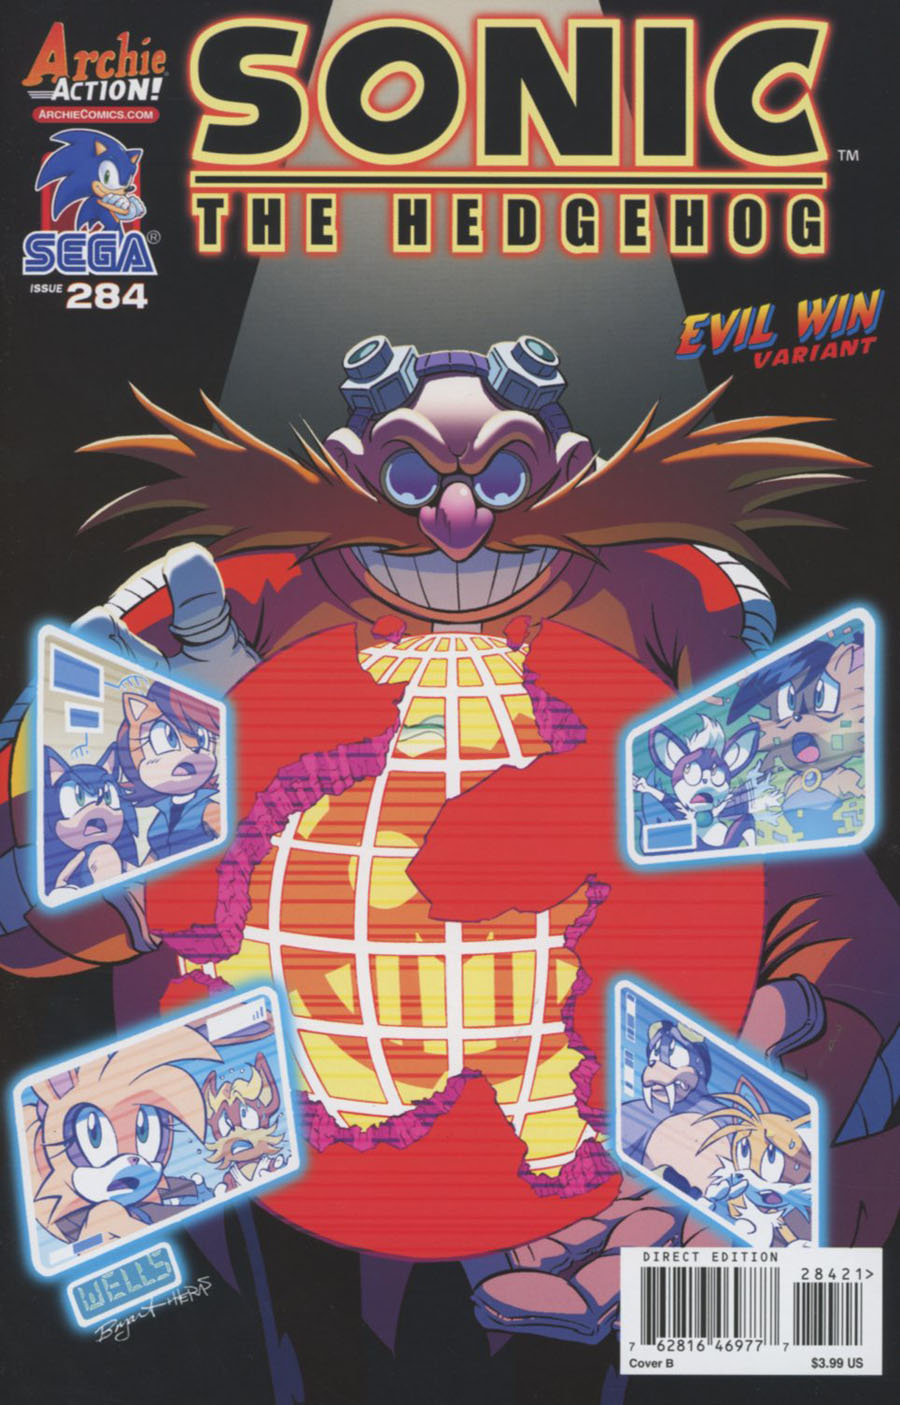 Sonic The Hedgehog Vol 2 #284 Cover B Variant Lamar Wells Evil Win Cover